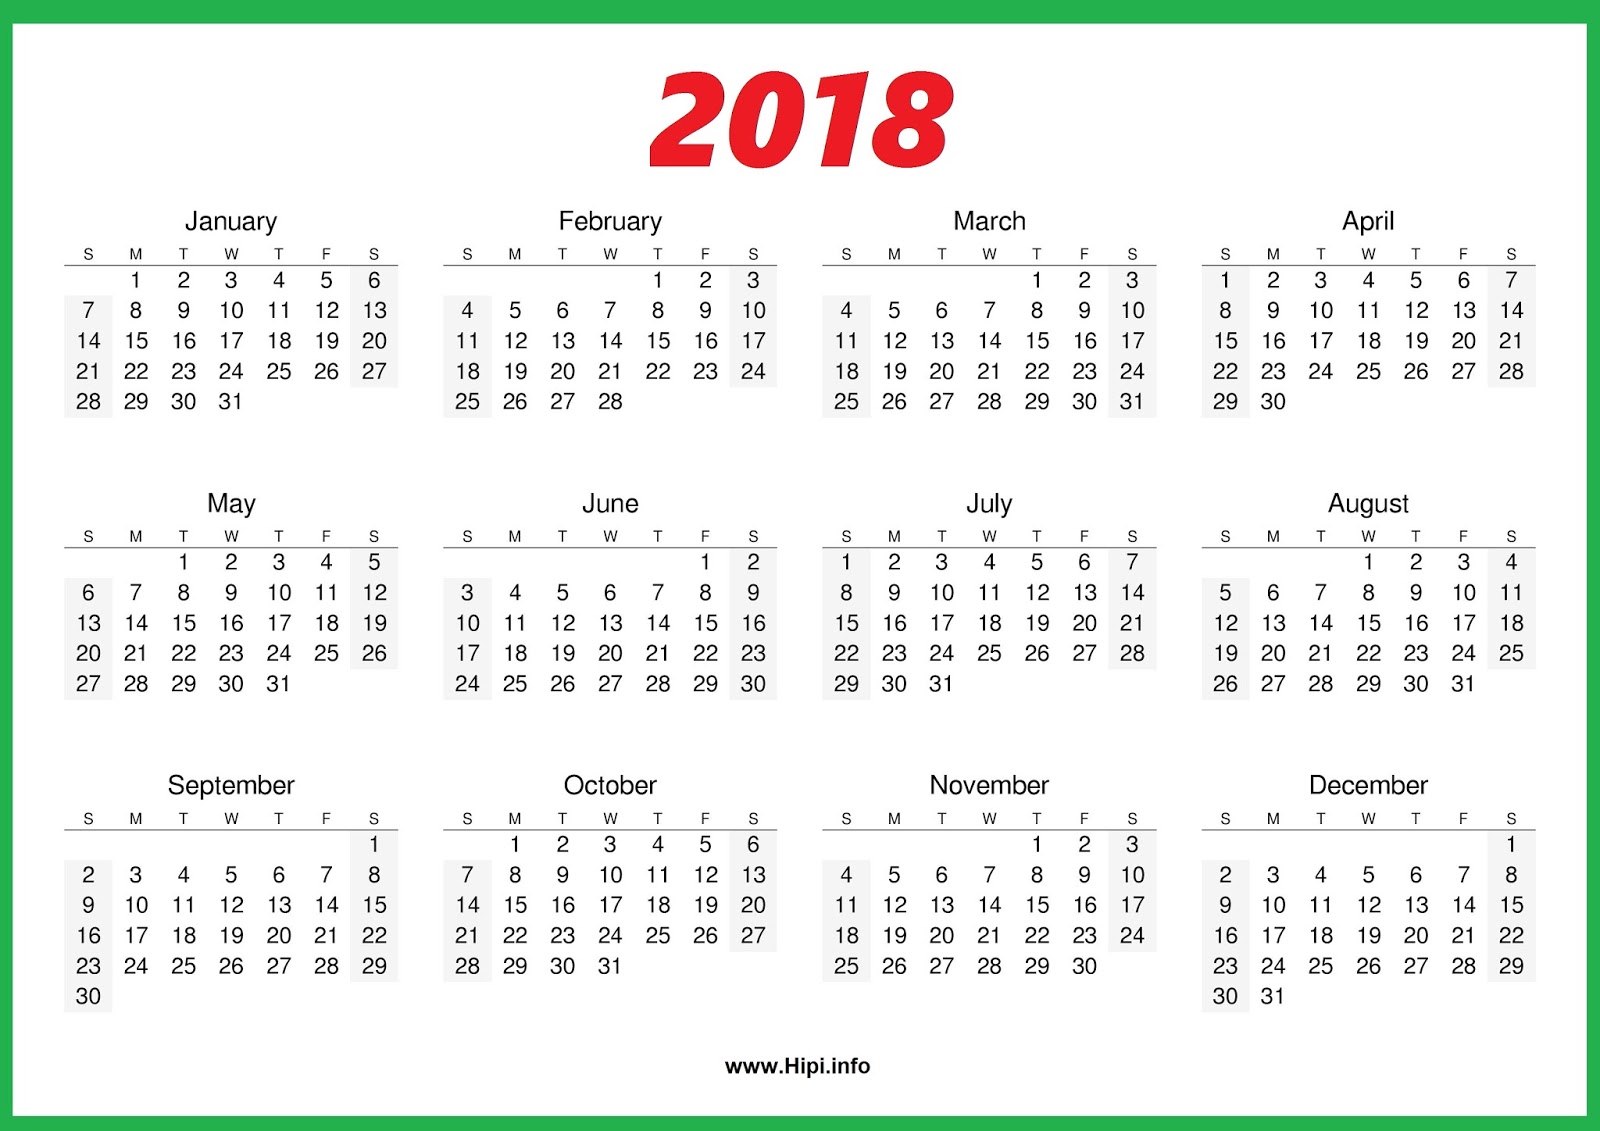 october-calendar-2021-month-calendar-printable